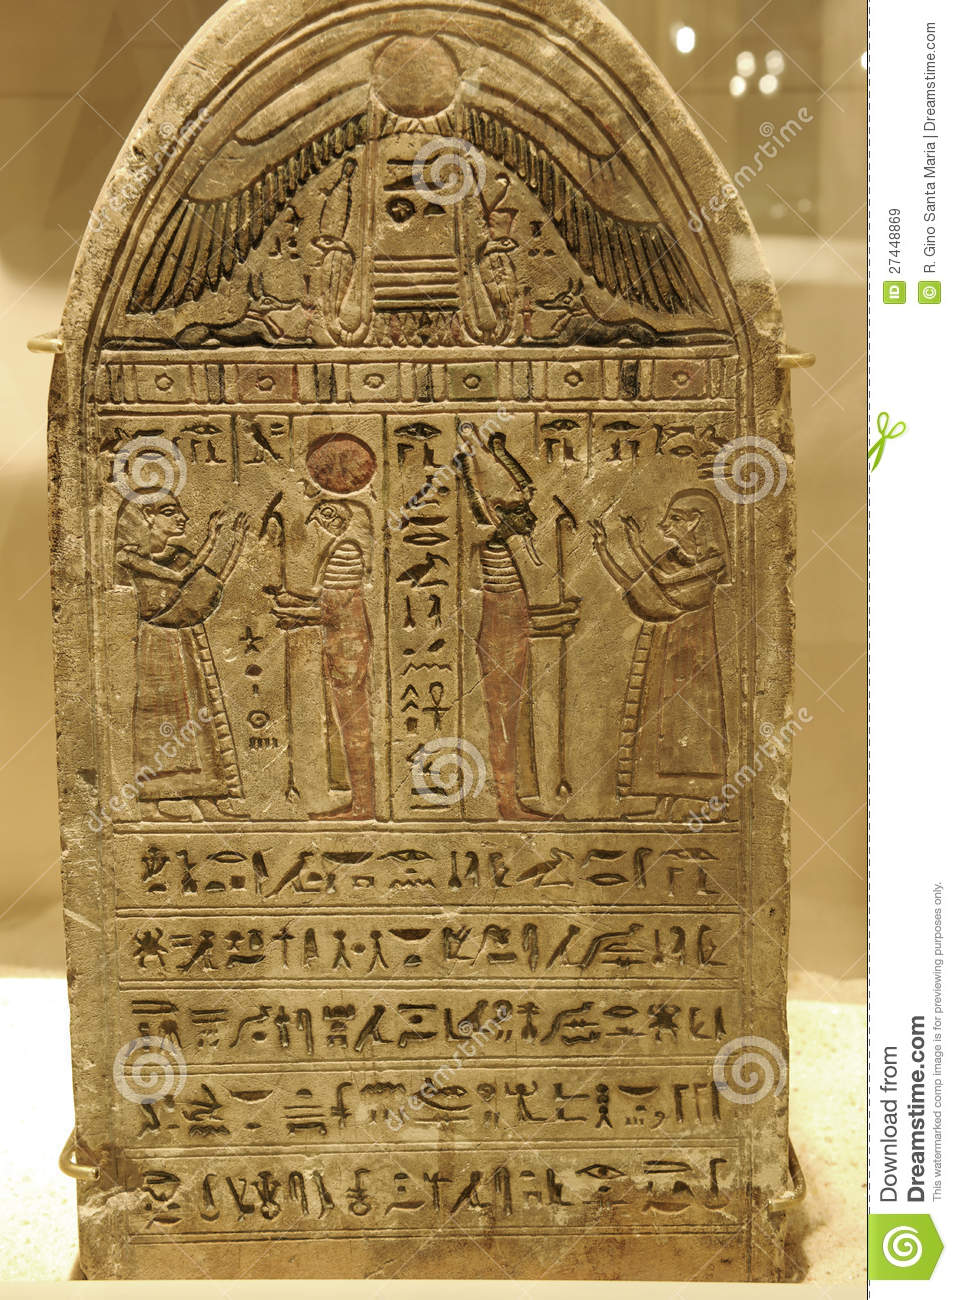 46 - Egyptian Nibiru winged disc symbol